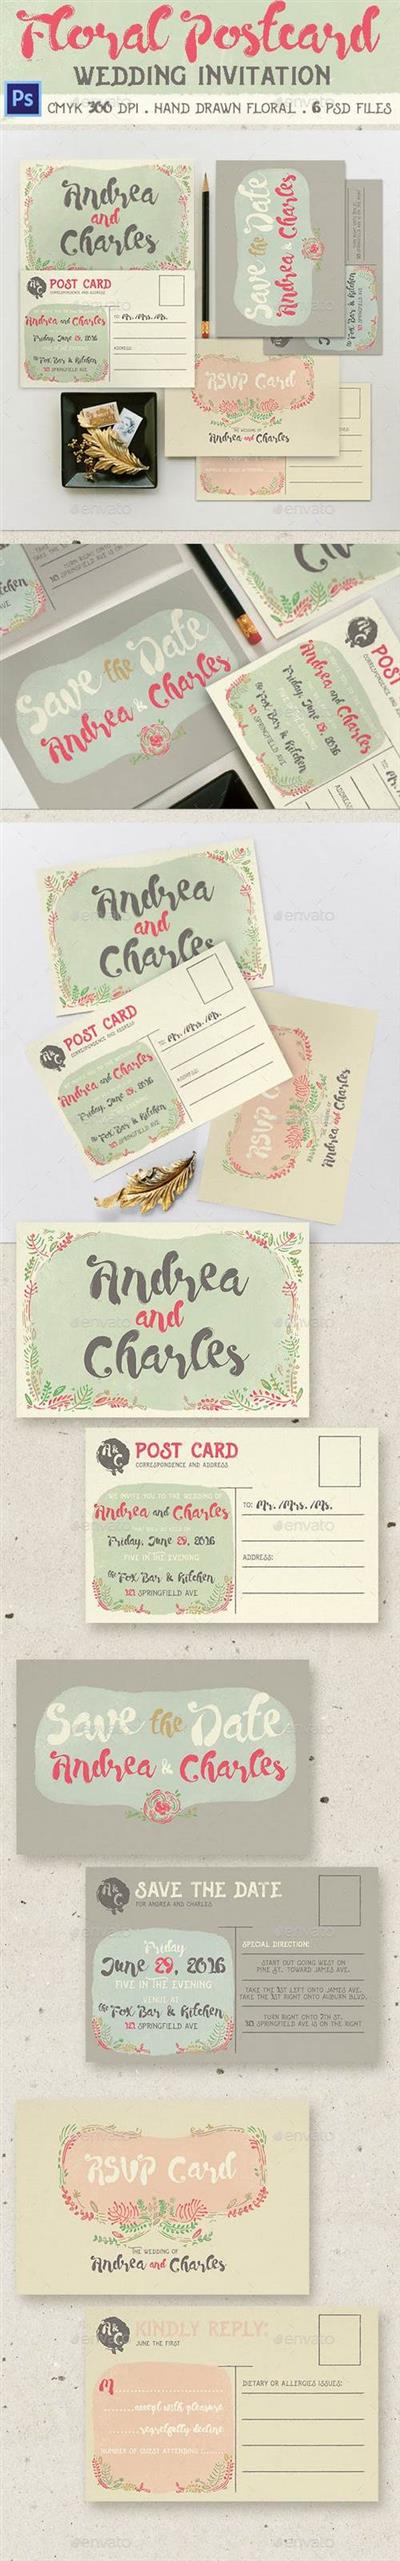 Graphicriver Floral Postcard Wedding Invitation 14153935